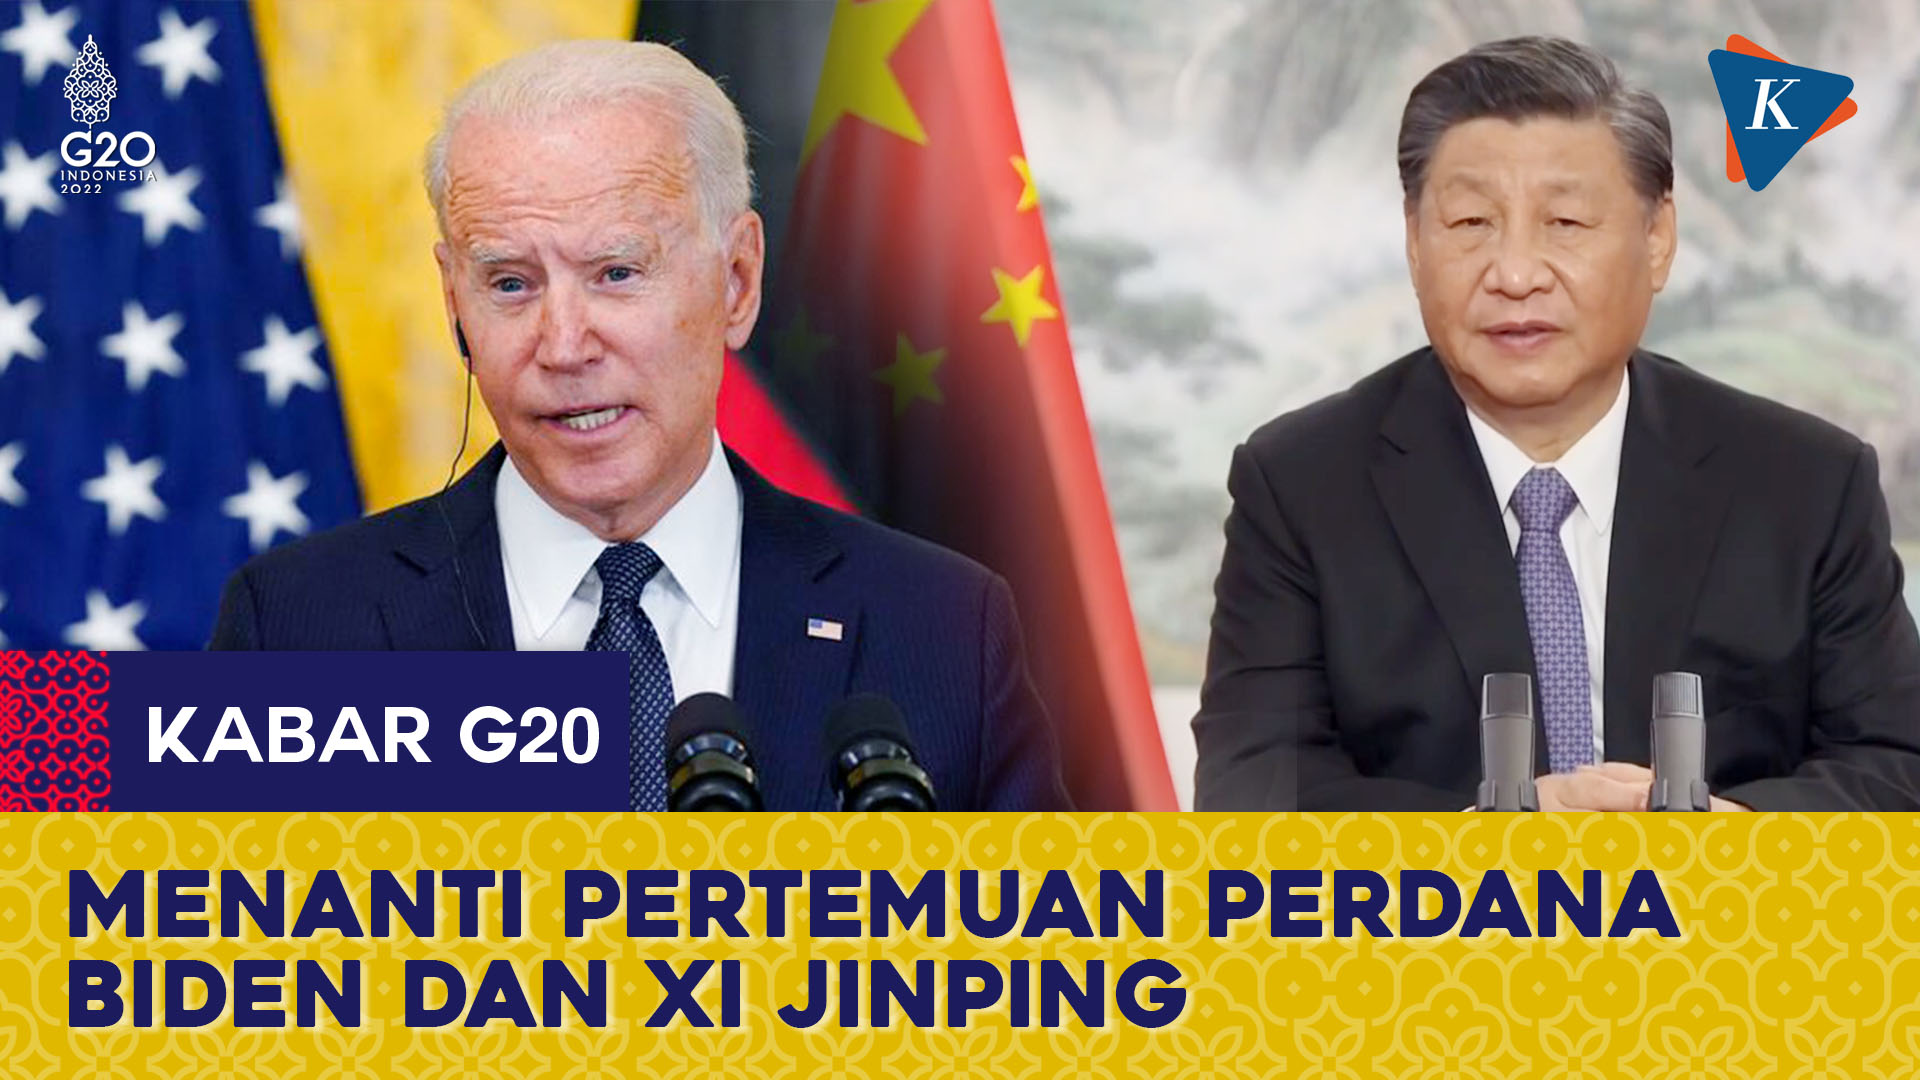 Senin Depan Biden dan XI Jinping Akan Bertemu di Sela KTT G20